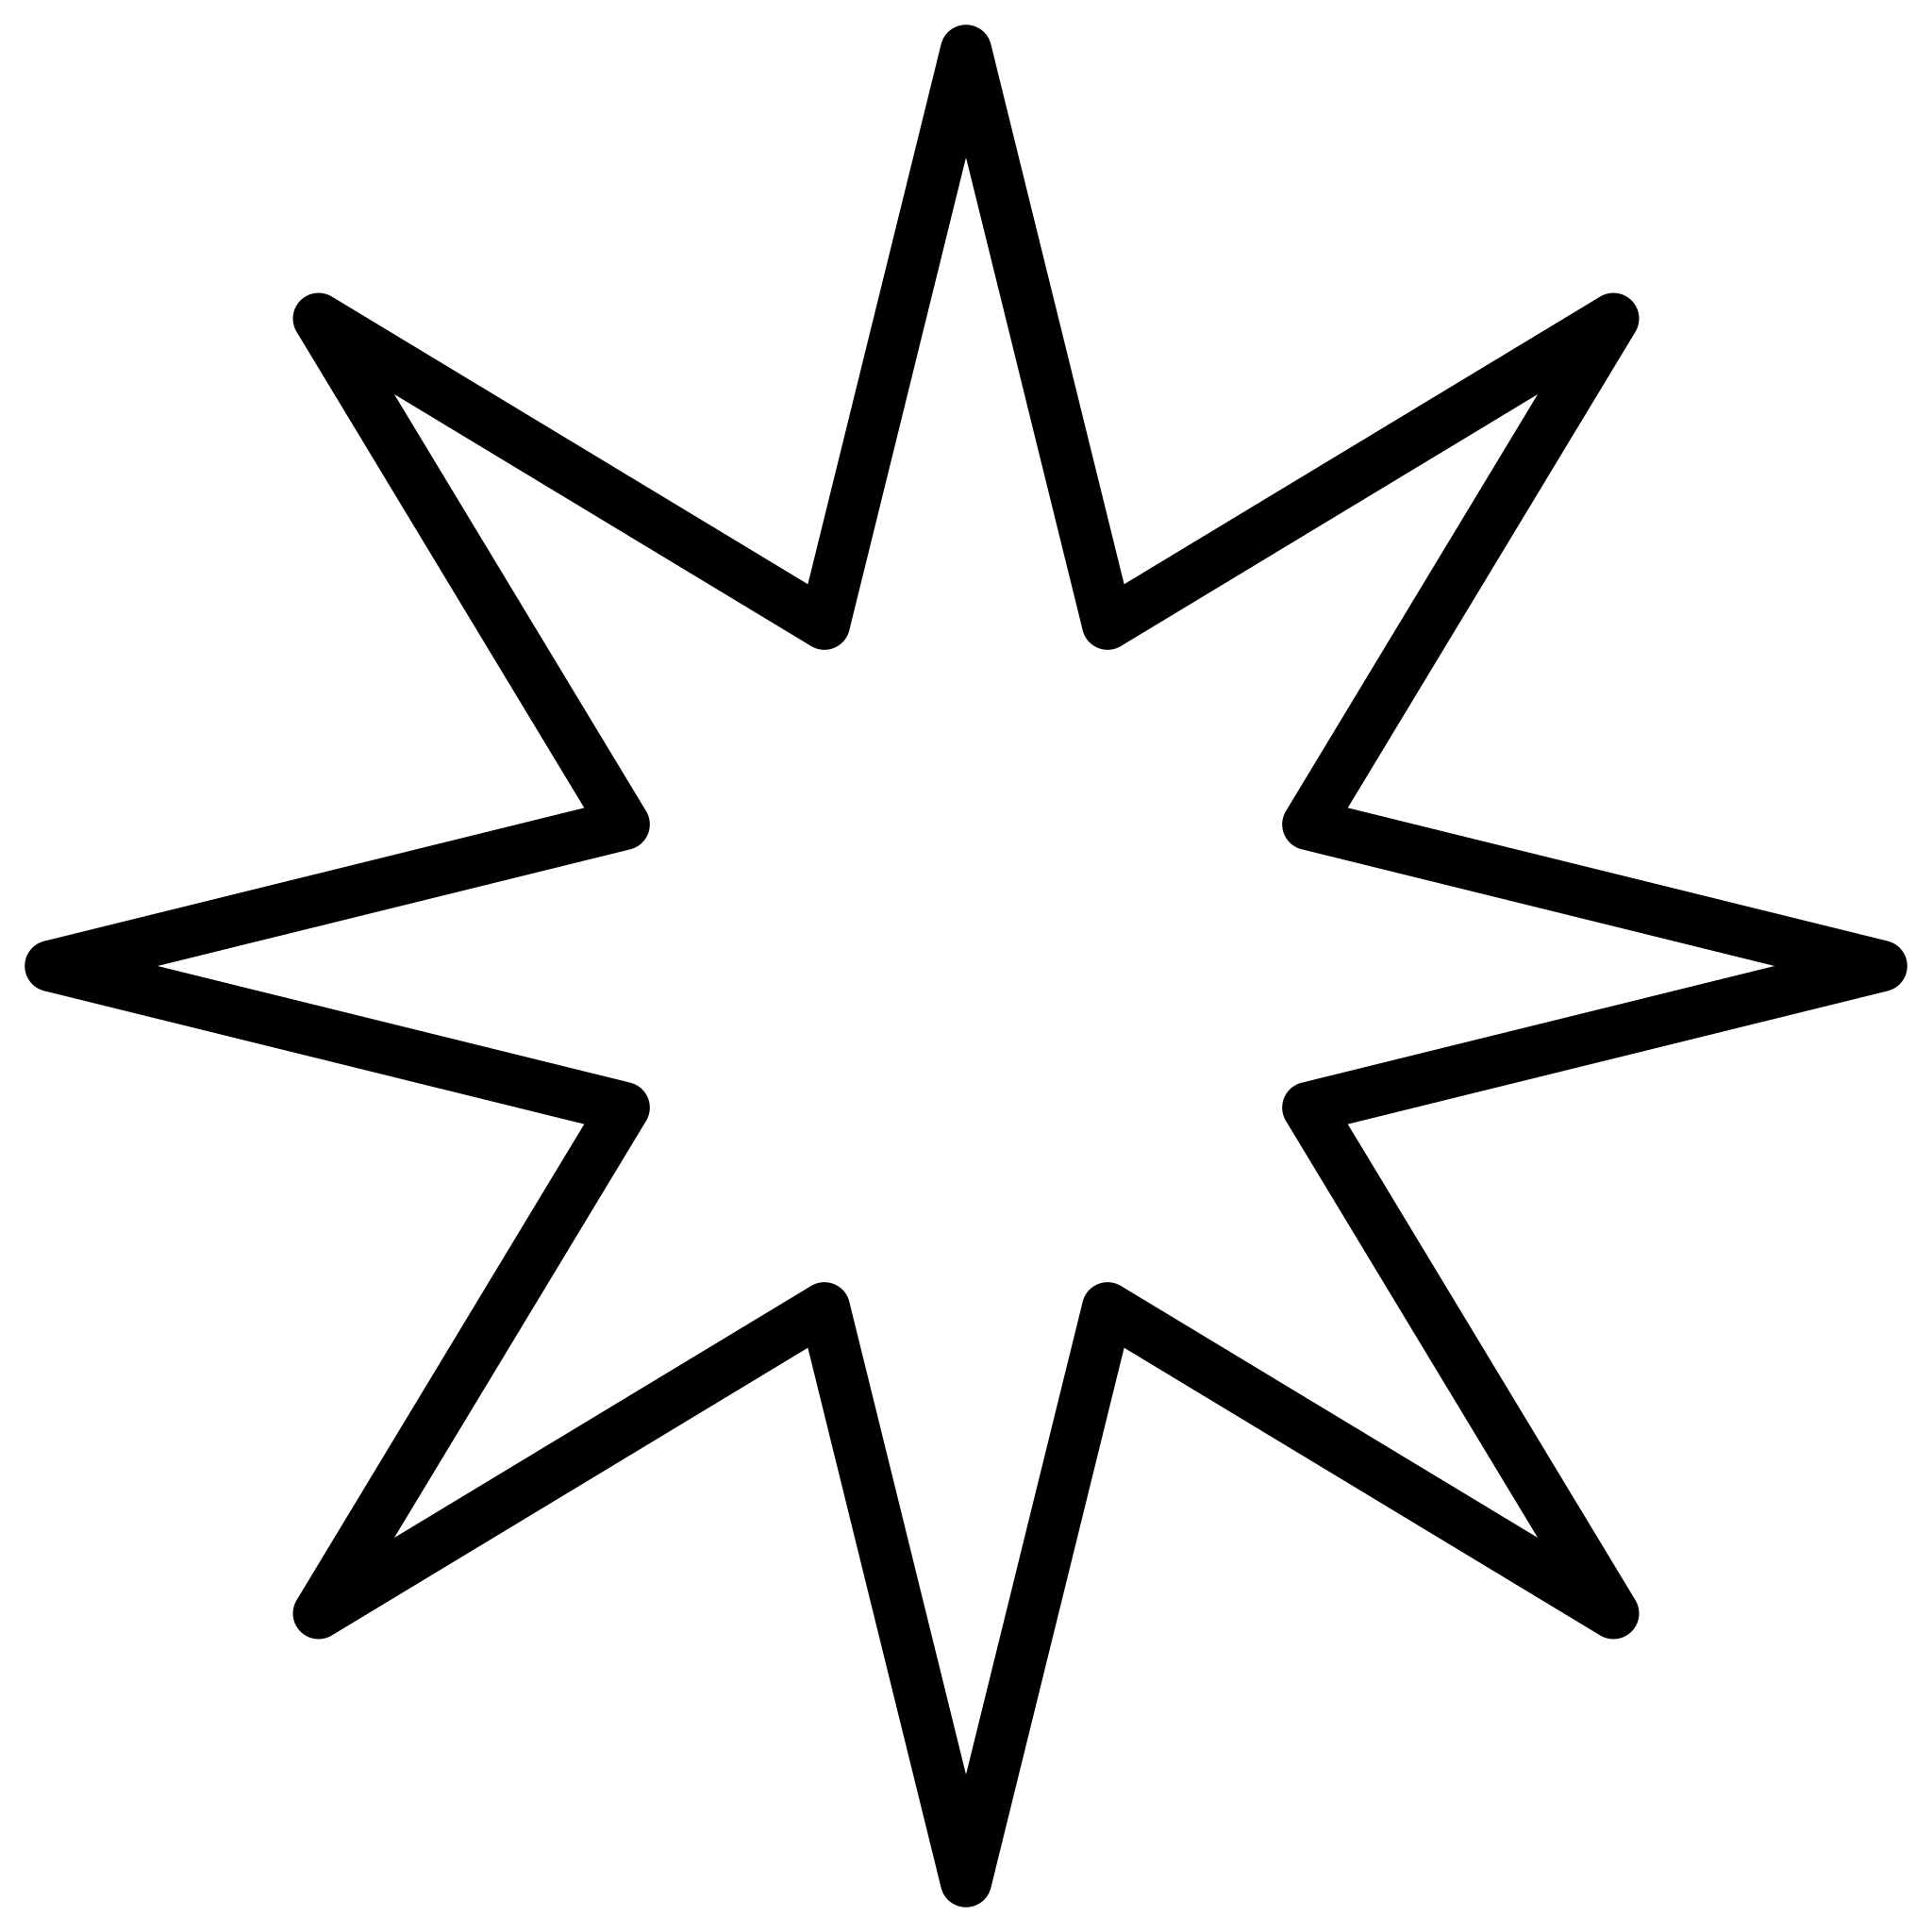 File:8-Point-Star black void2.svg - Wikipedia